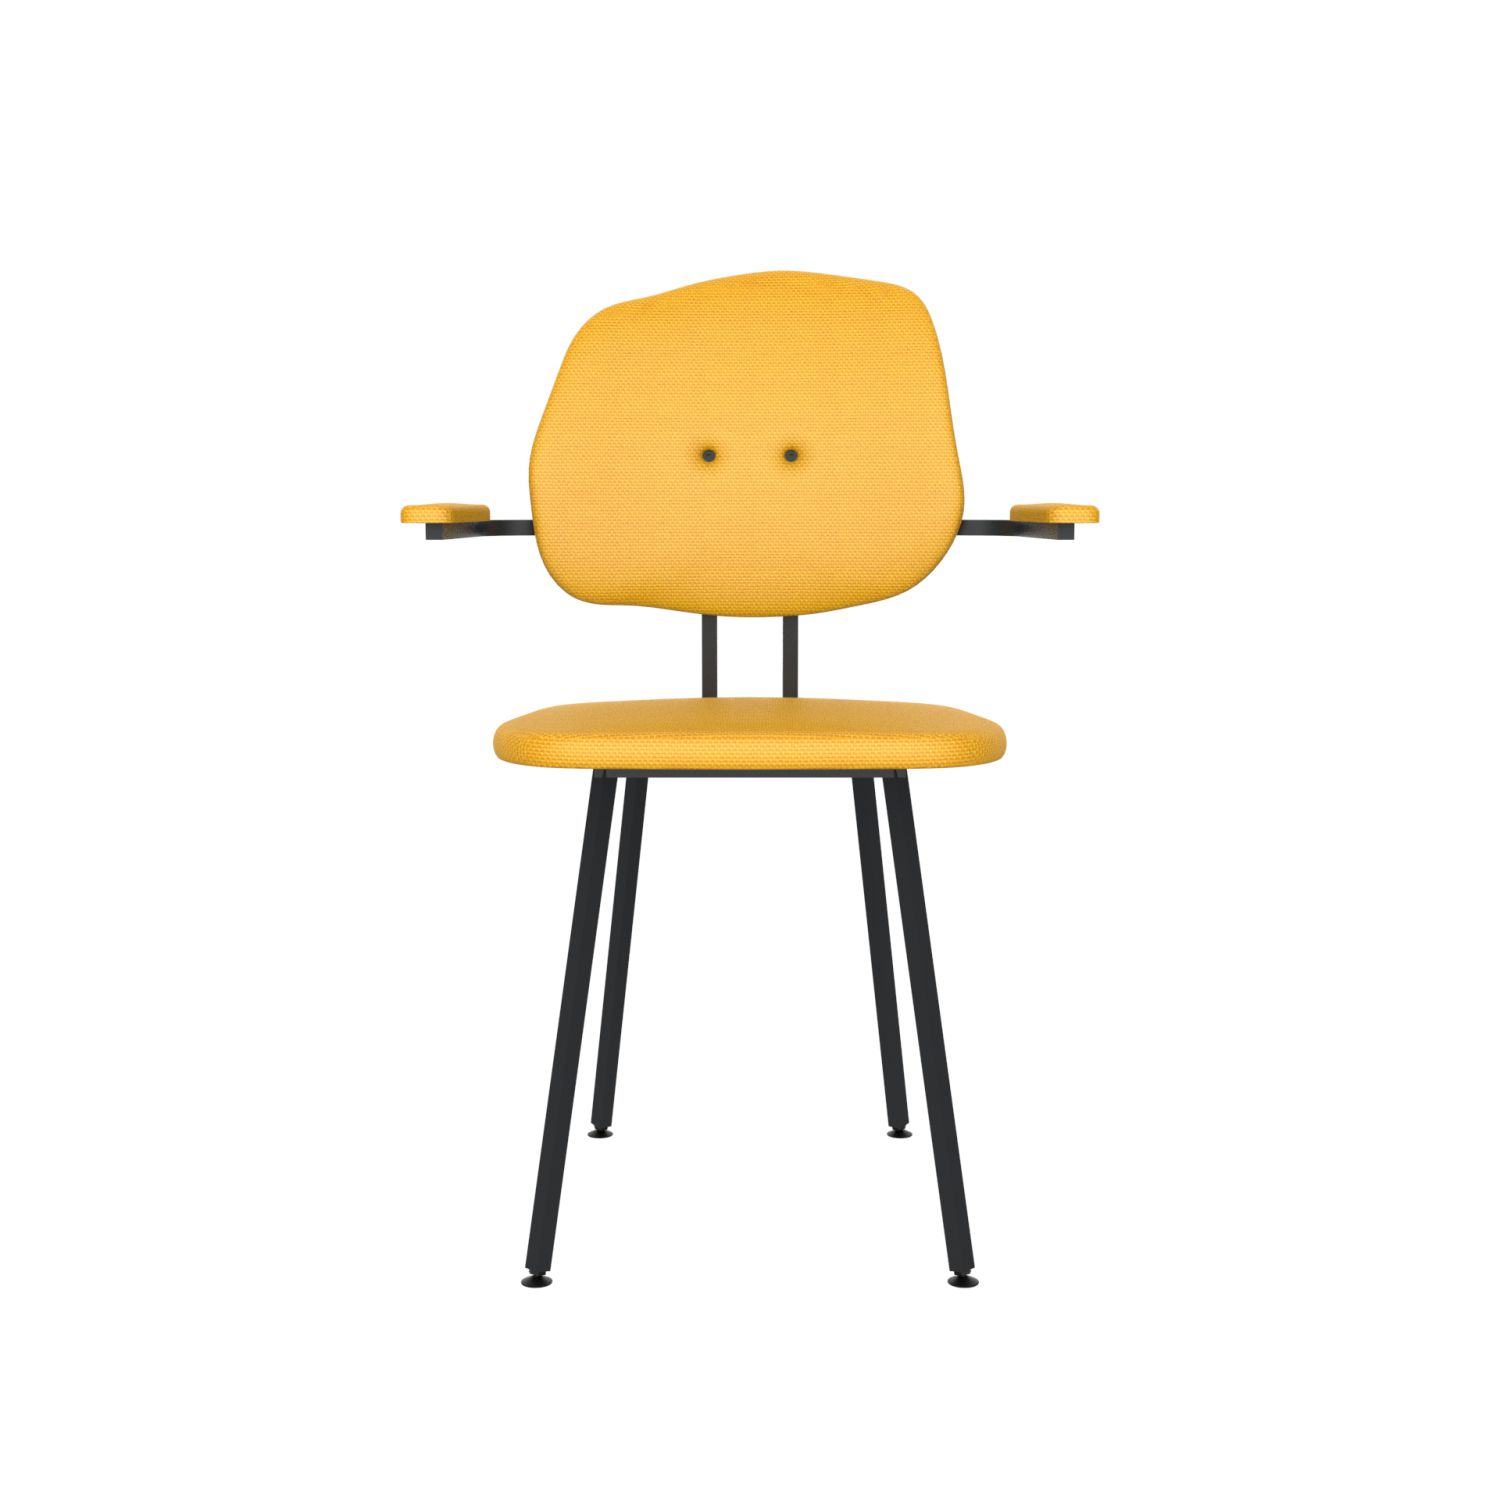 lensvelt maarten baas chair 102 not stackable with armrests backrest g lemon yellow 051 black ral9005 hard leg ends